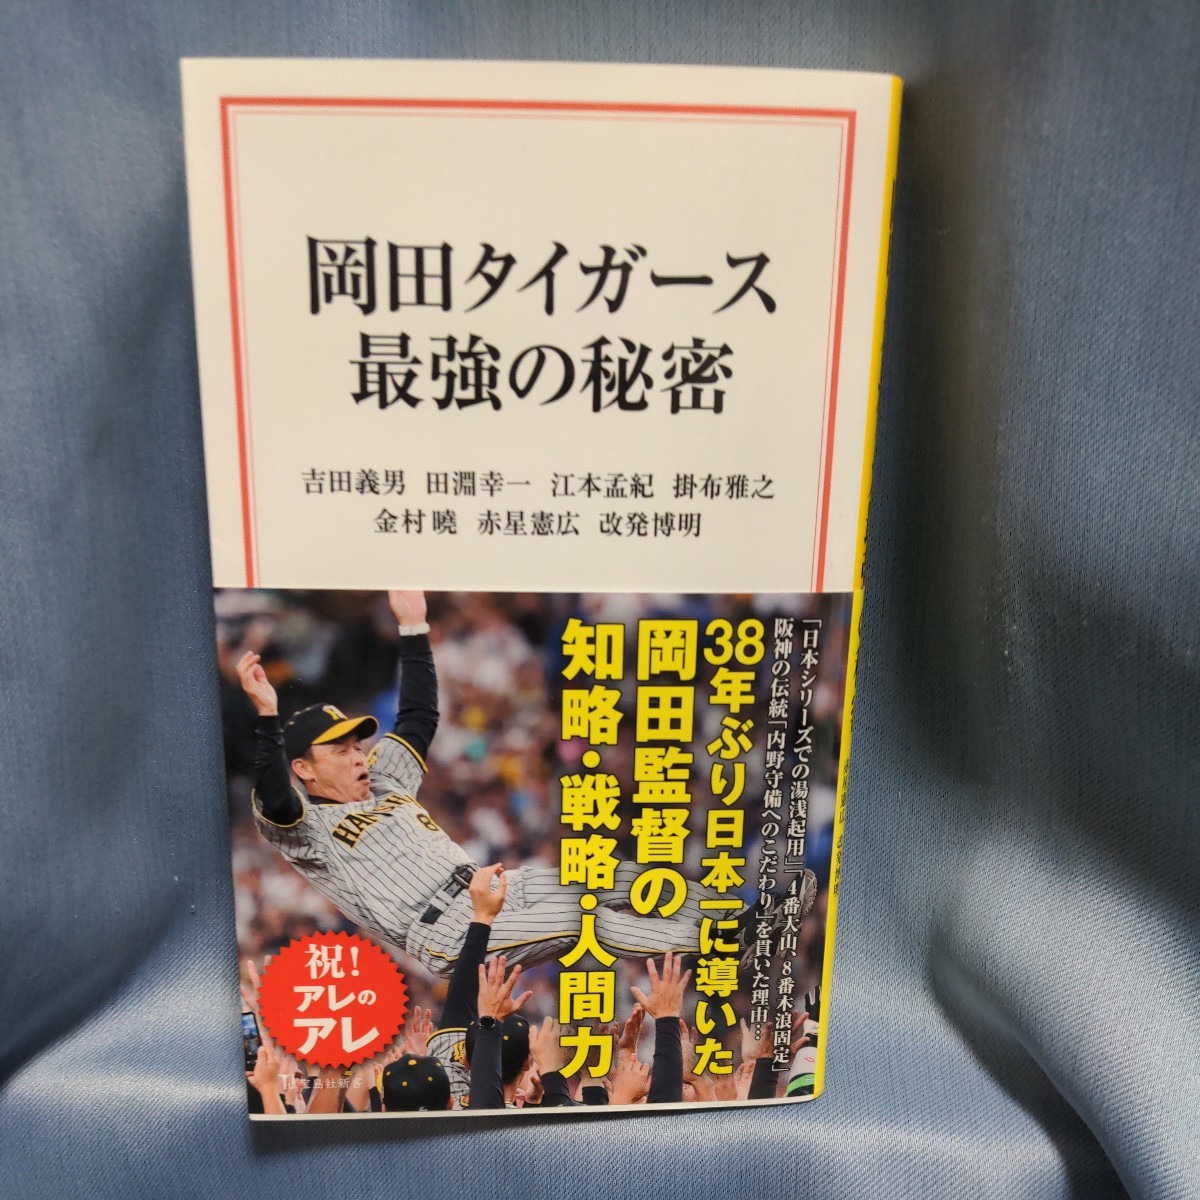  hill rice field Tiger s strongest secret "Treasure Island" company new book obi attaching 